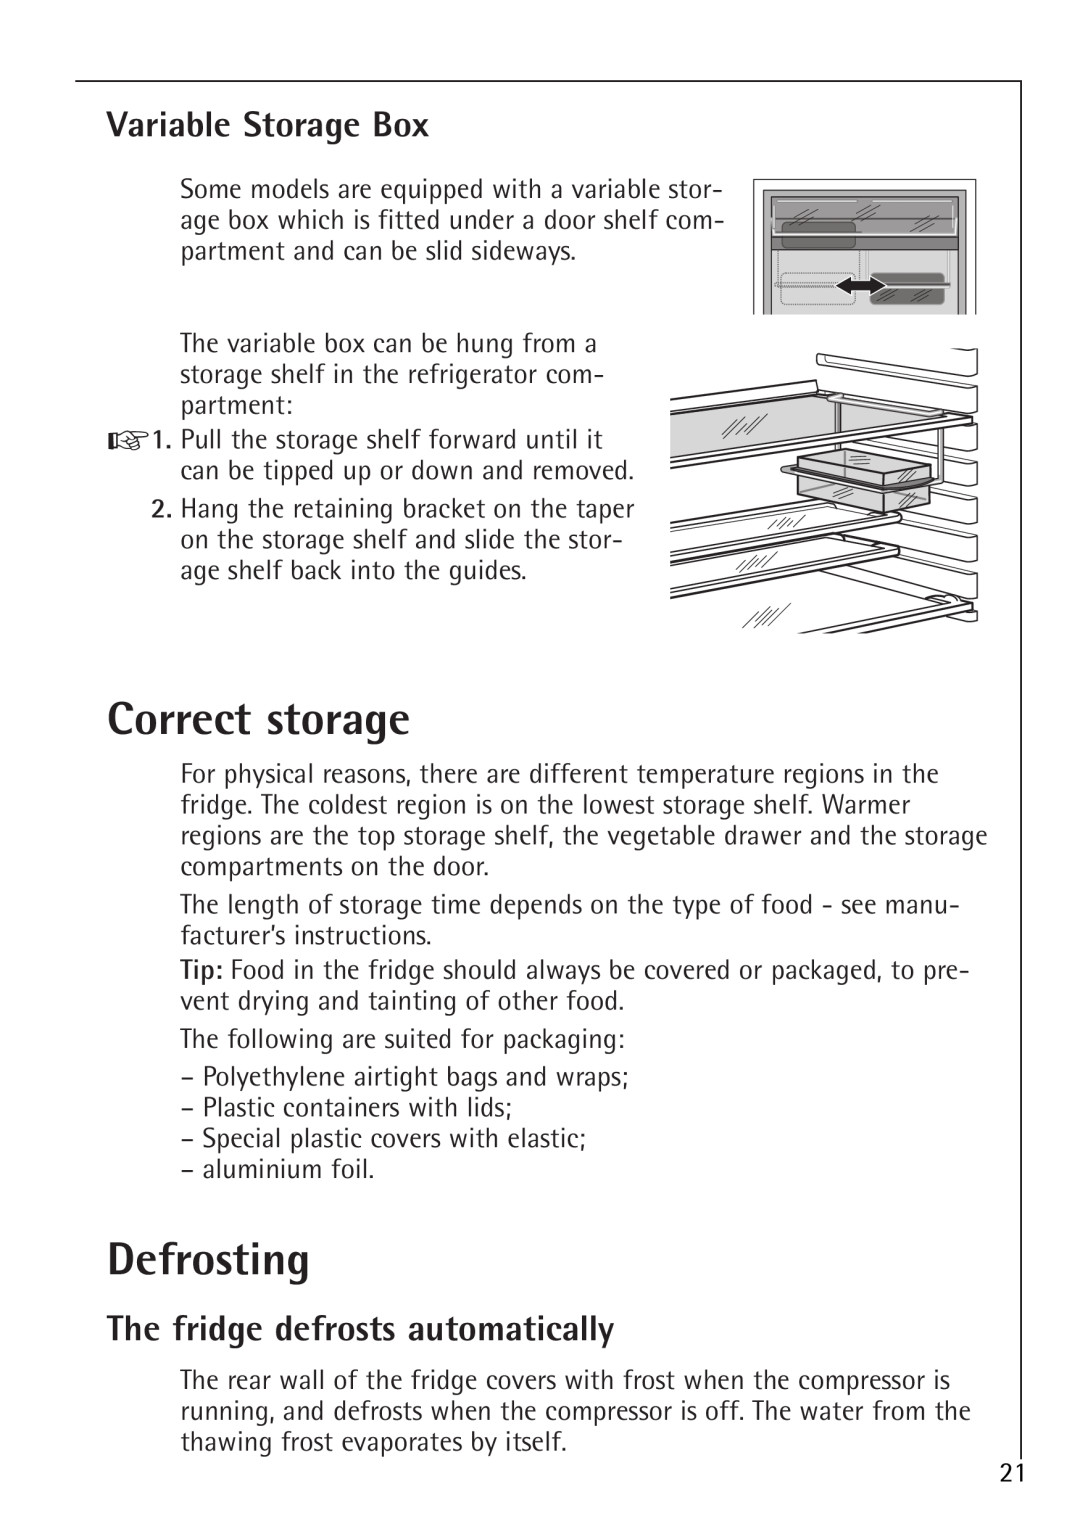 Electrolux 86000 i Correct storage, Defrosting, Variable Storage Box, The fridge defrosts automatically 